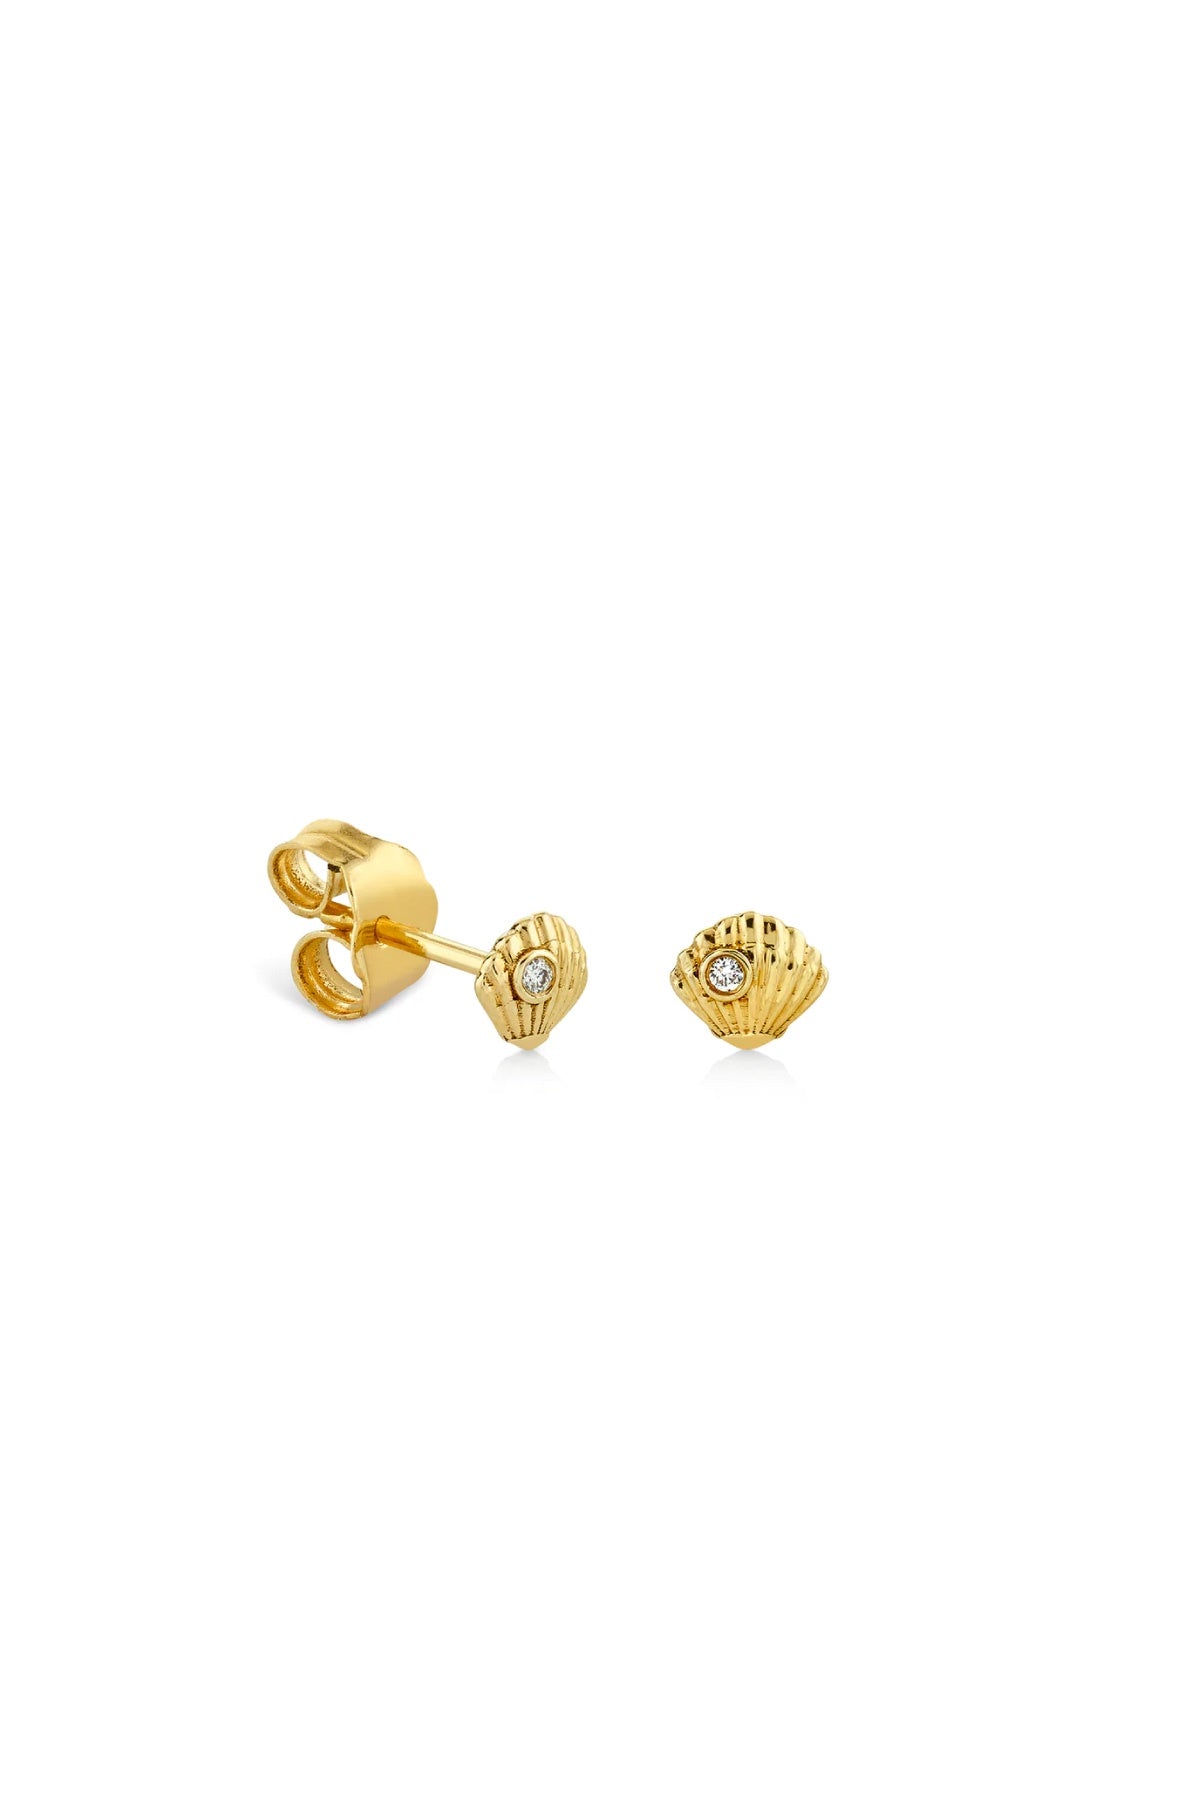 Sydney Evan Diamond Tiny Shell Clam Stud Earrings - Yellow Gold